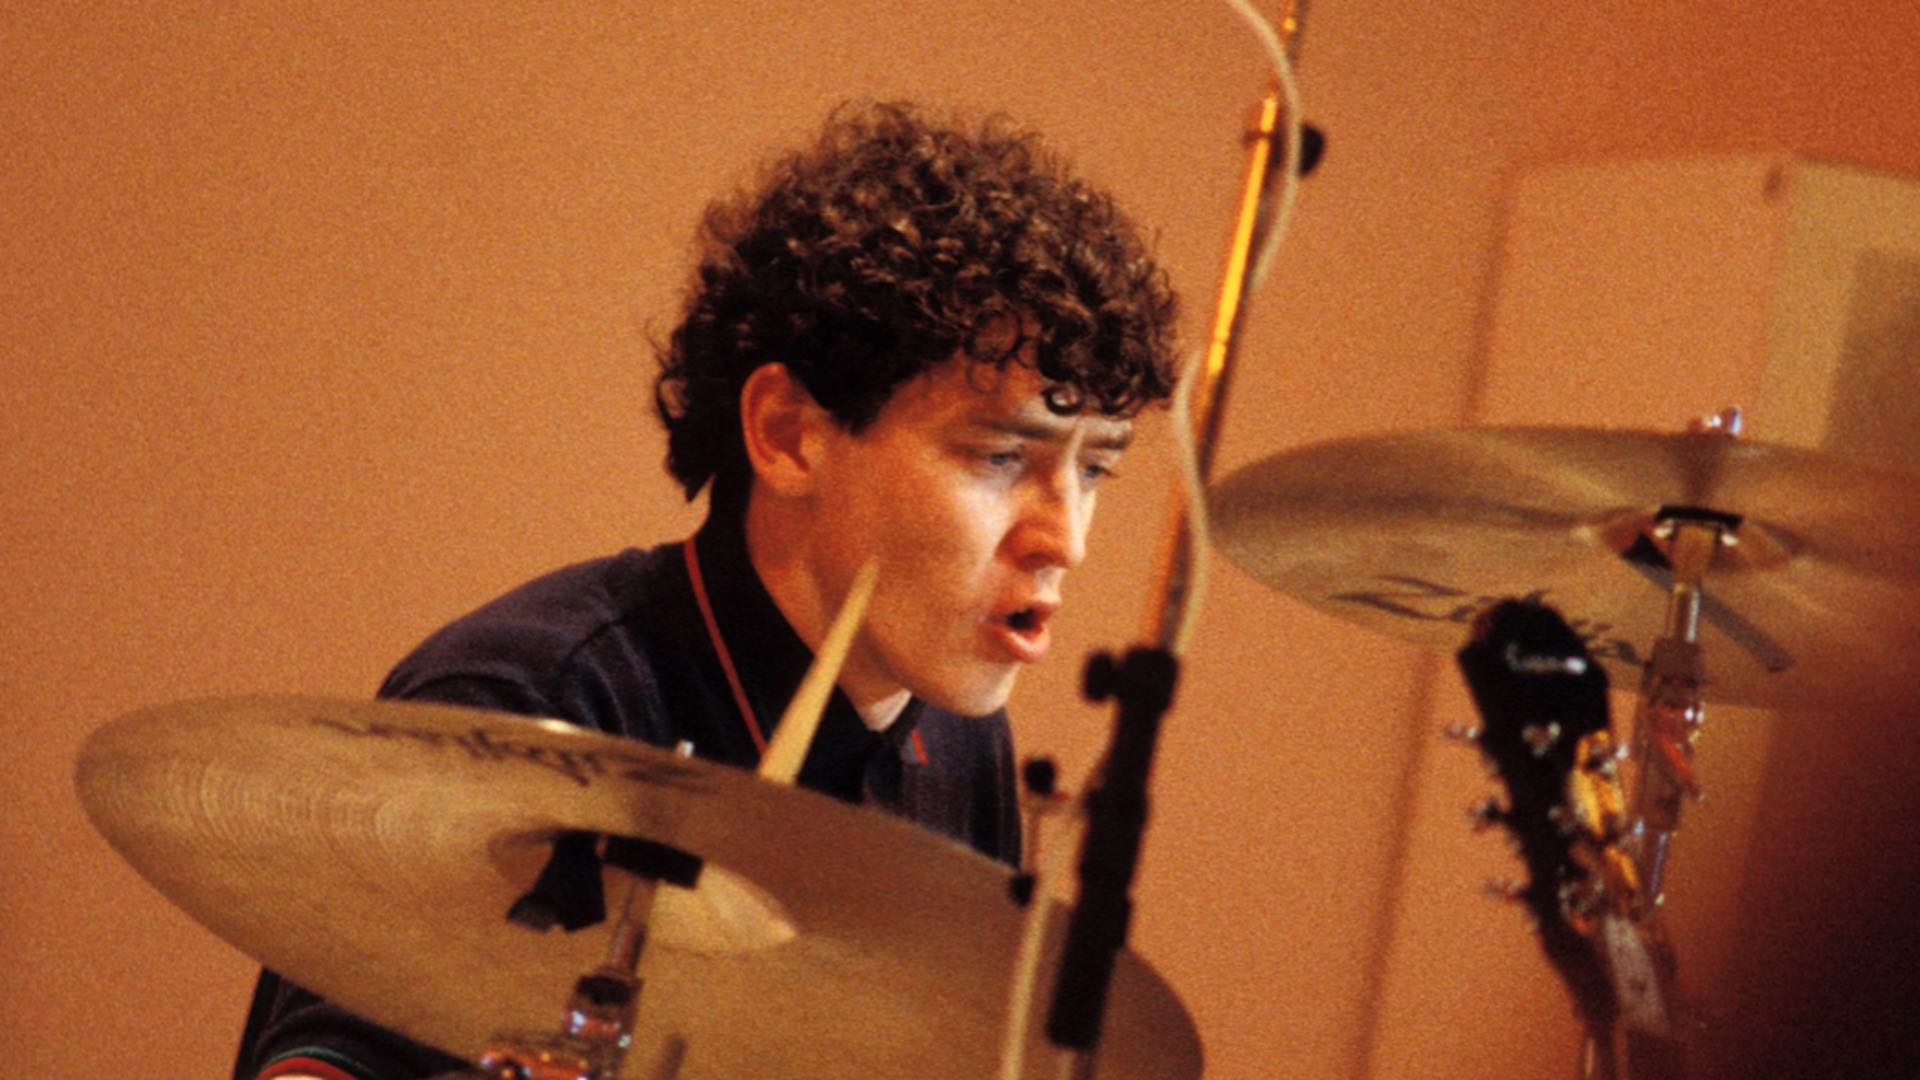 Tony McCarroll, primer baterista de Oasis, hospitalizado tras sufrir un infarto